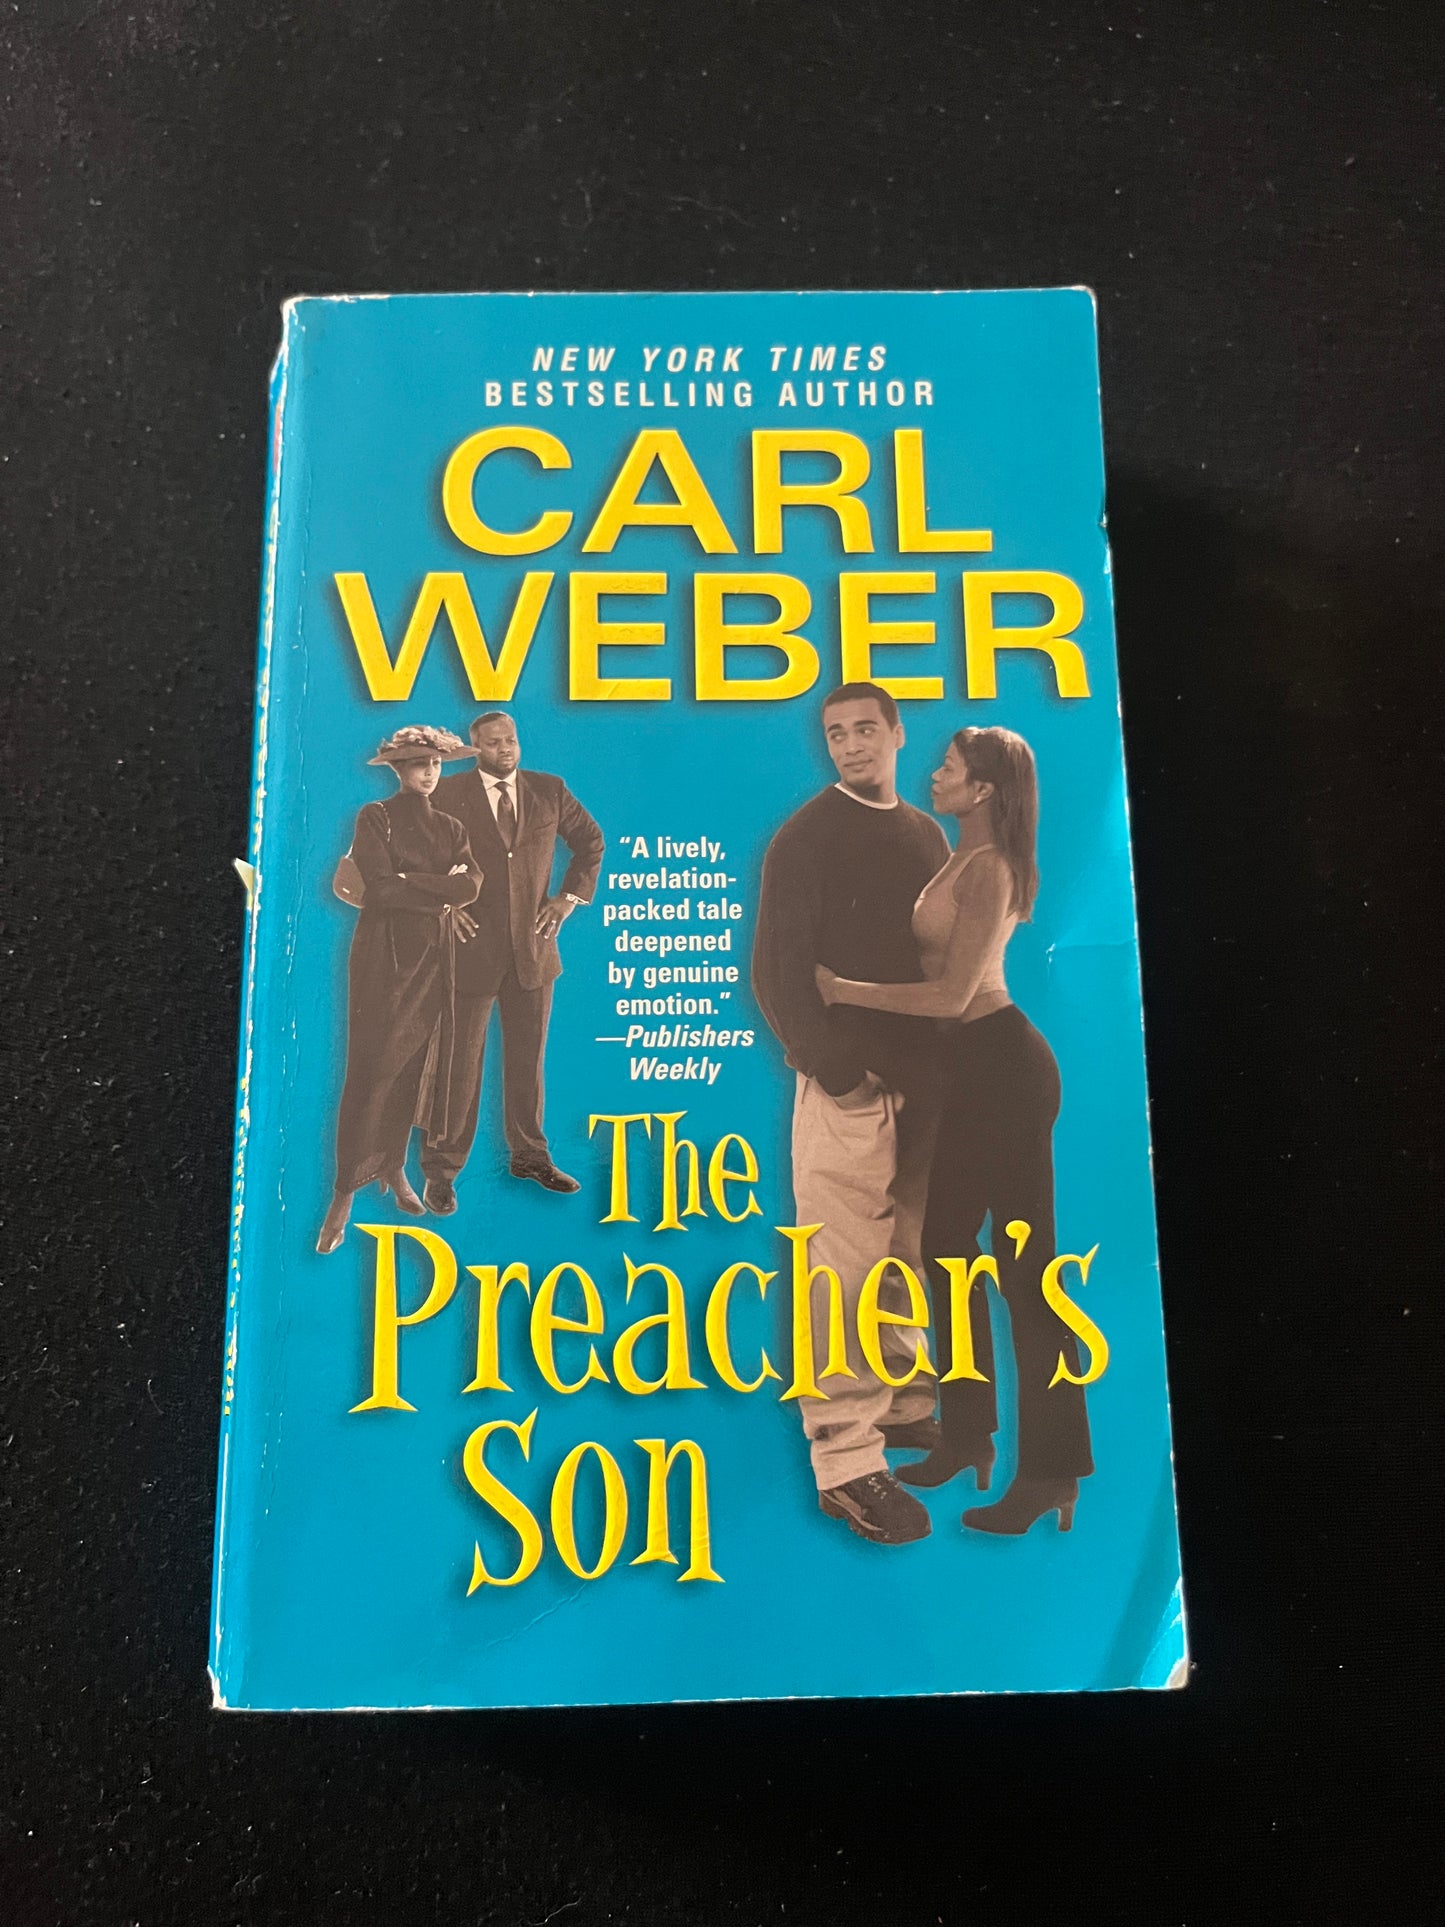 THE PREACHER'S SON by Carl Weber